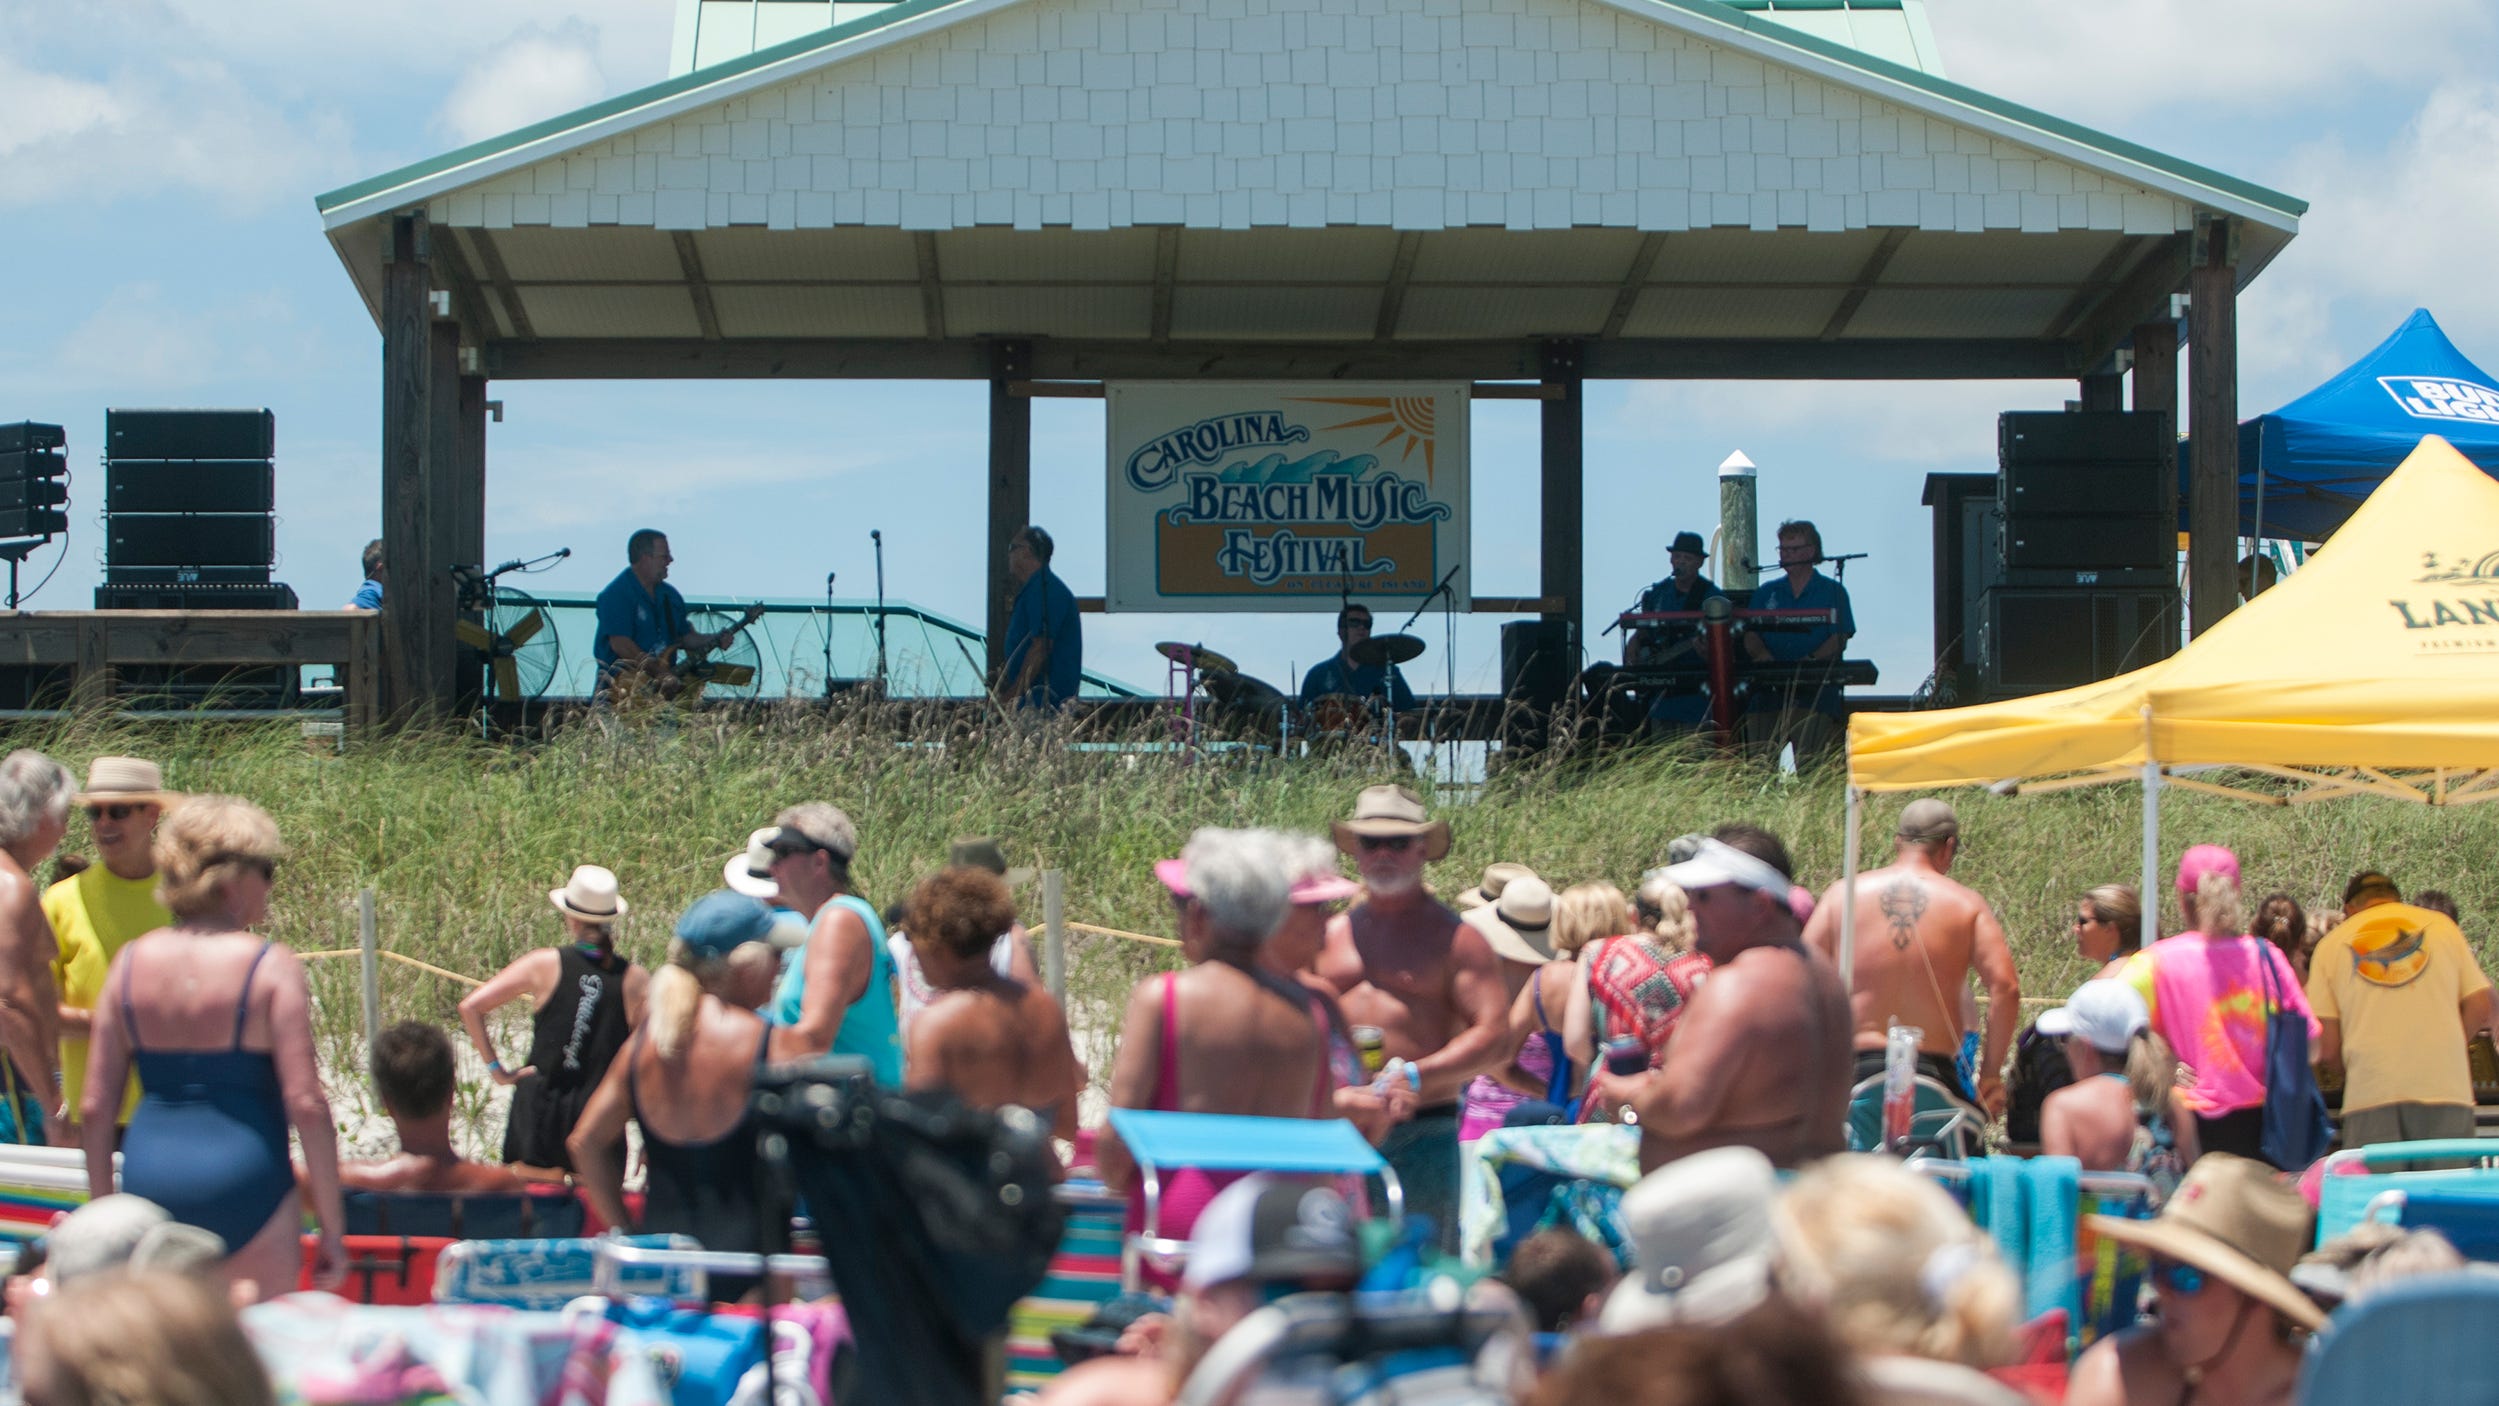 Carolina Beach Music Festival announces date, bands